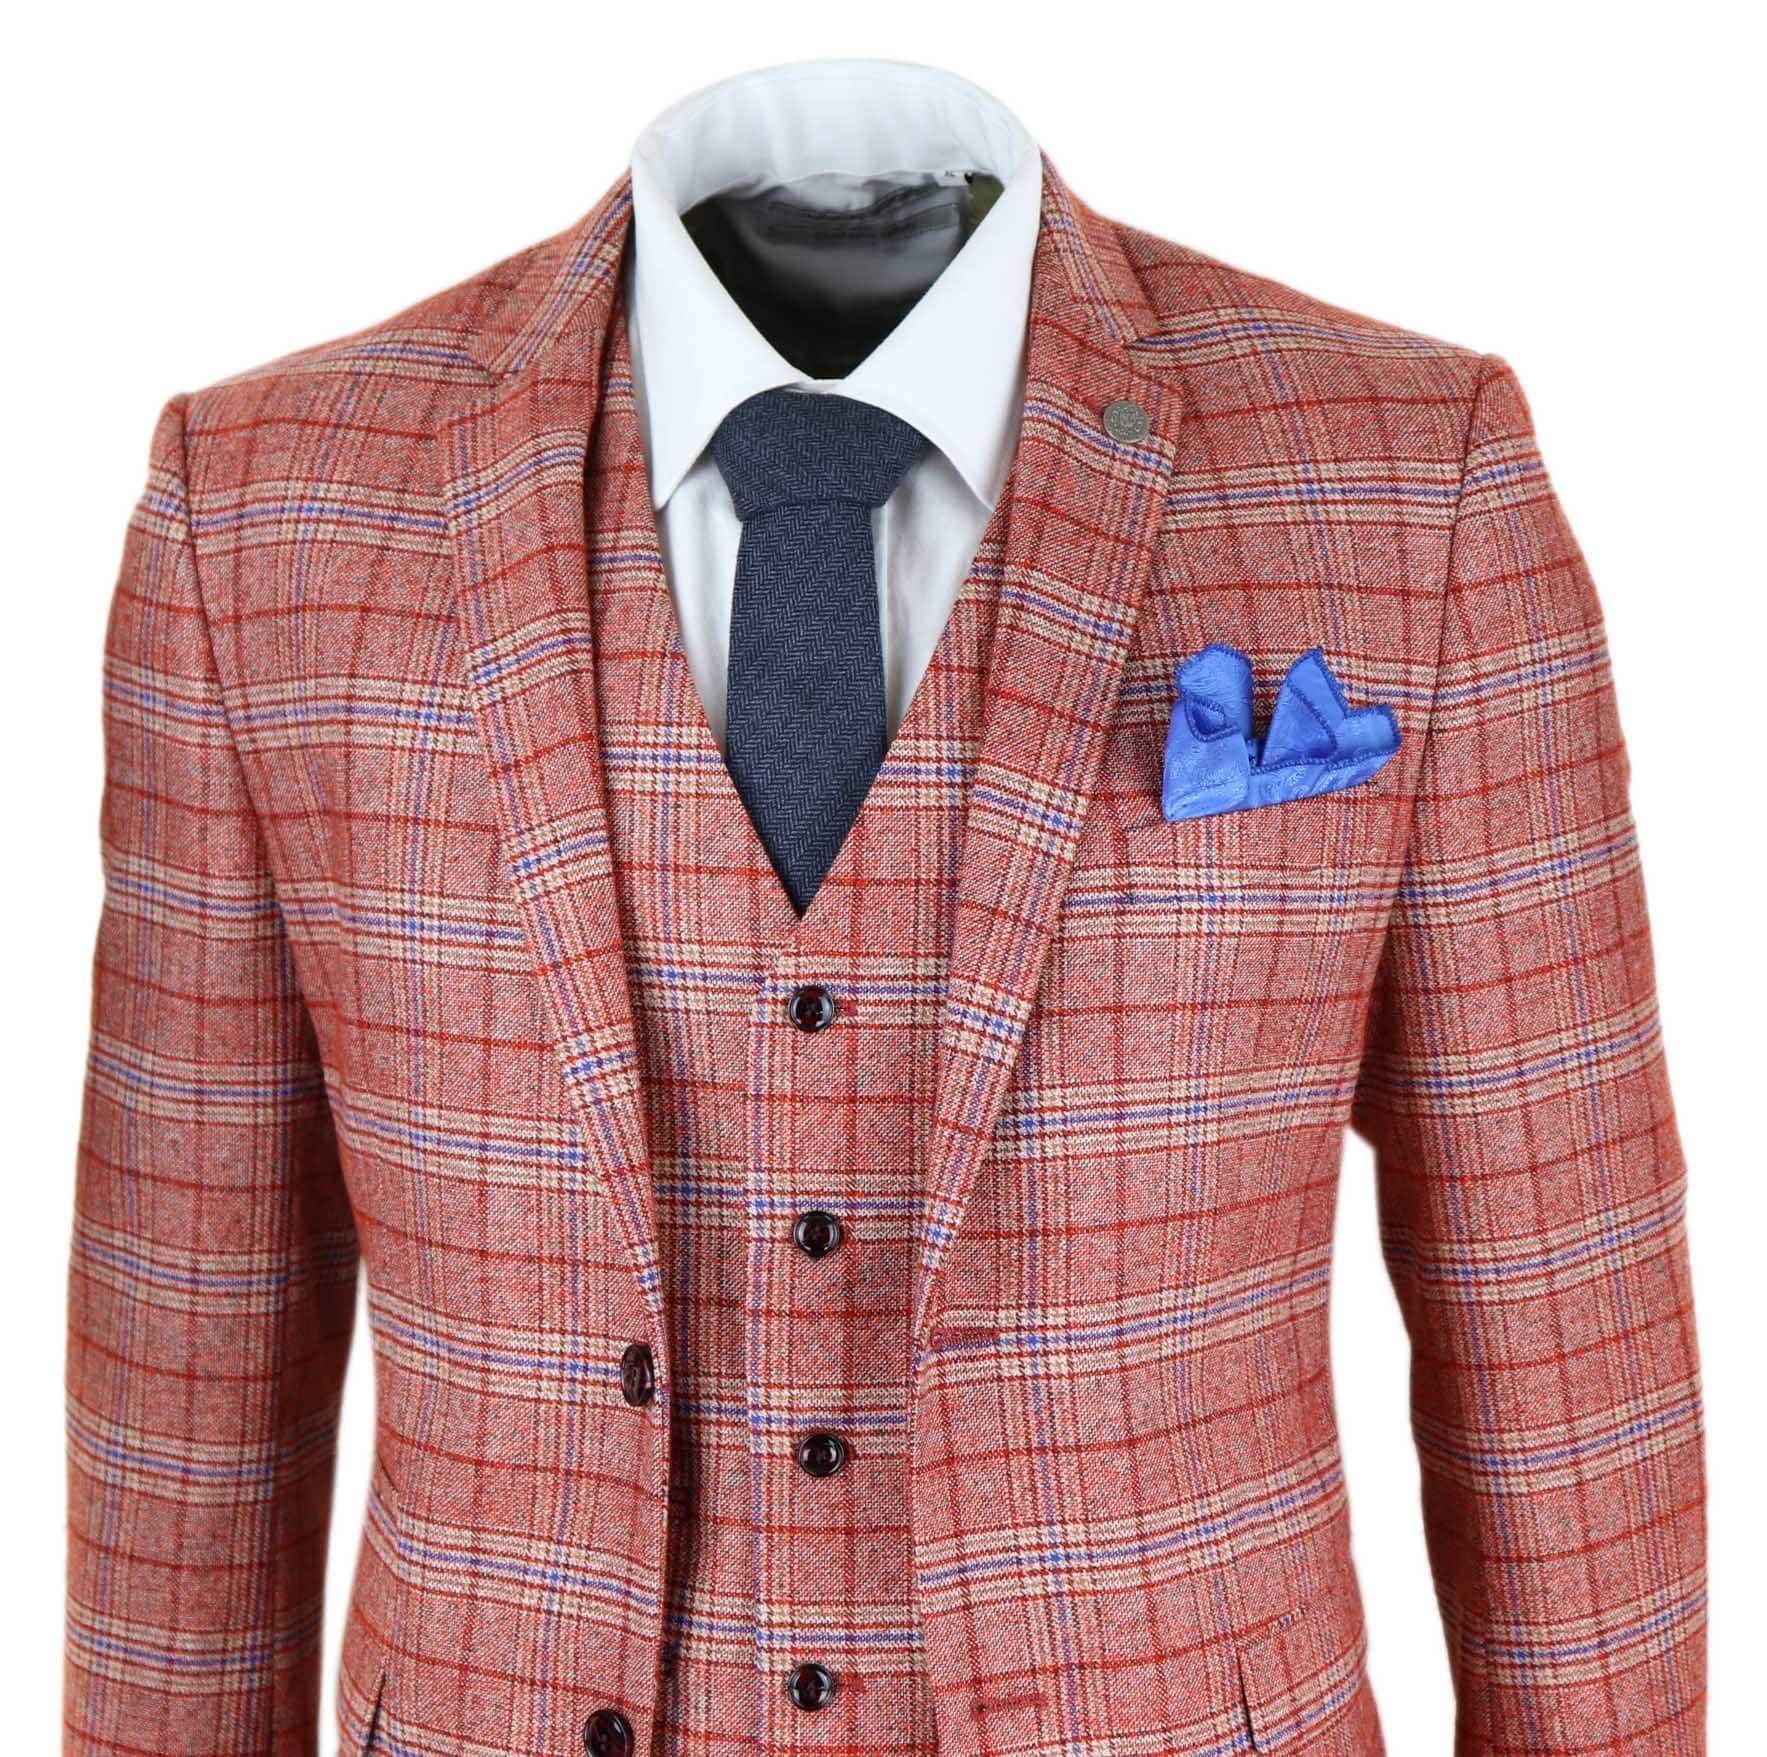 TruClothing.com Mens Wine Maroon Check Herringbone Tweed Vintage Tailored Fit 3 Piece Suit Smart